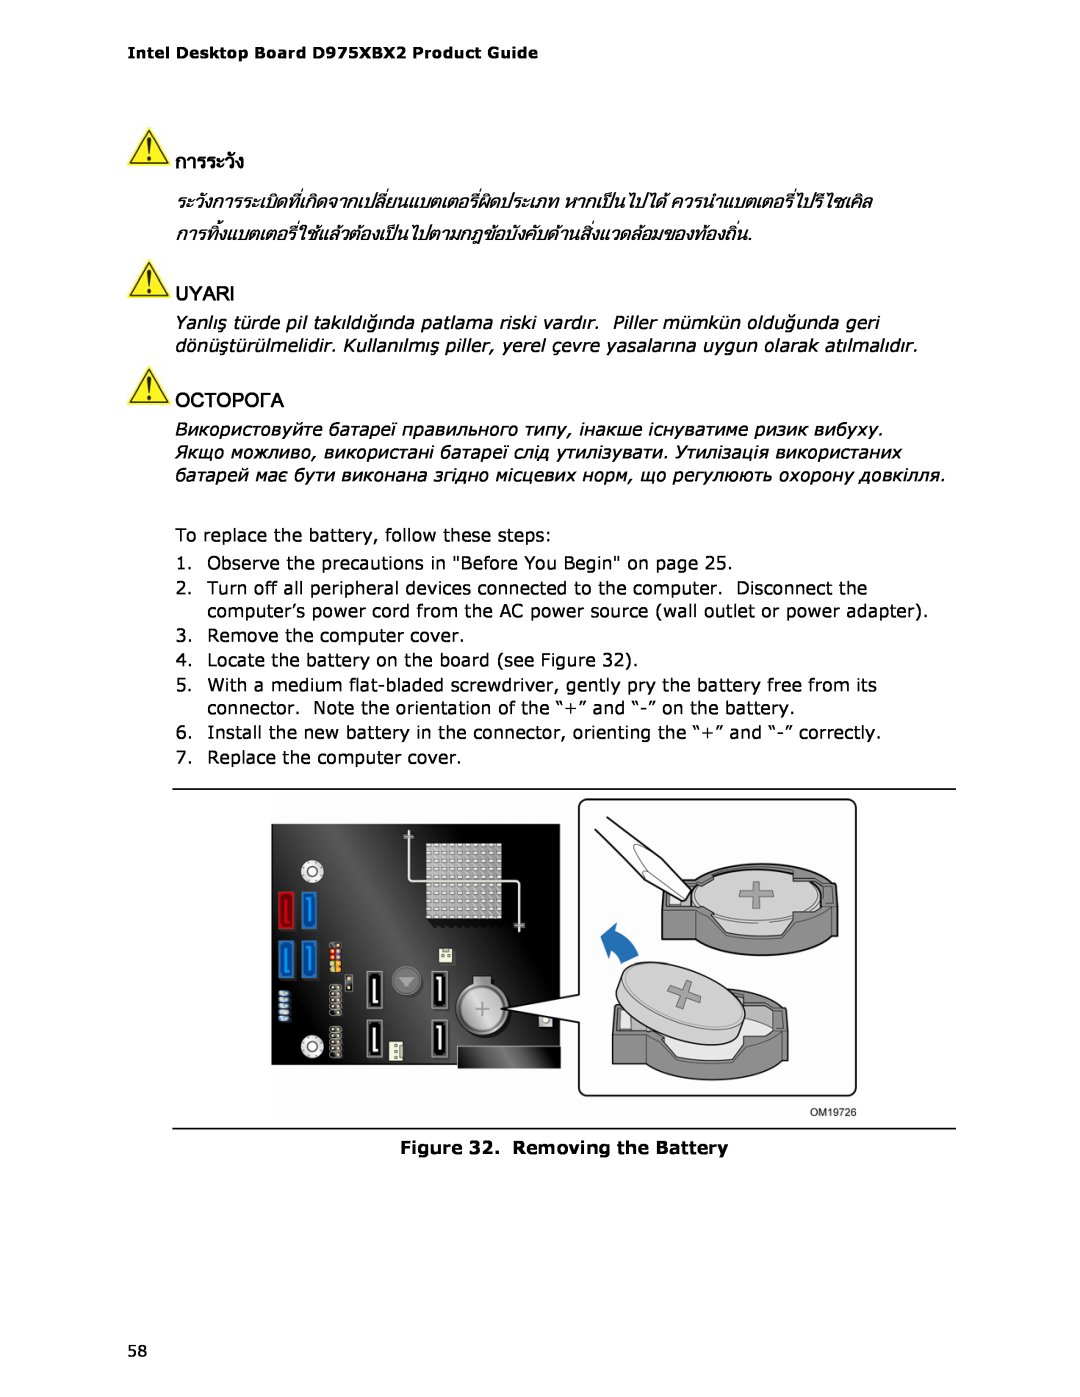 Intel D975XBX2 manual Oсторога, การระวัง, Uyari 